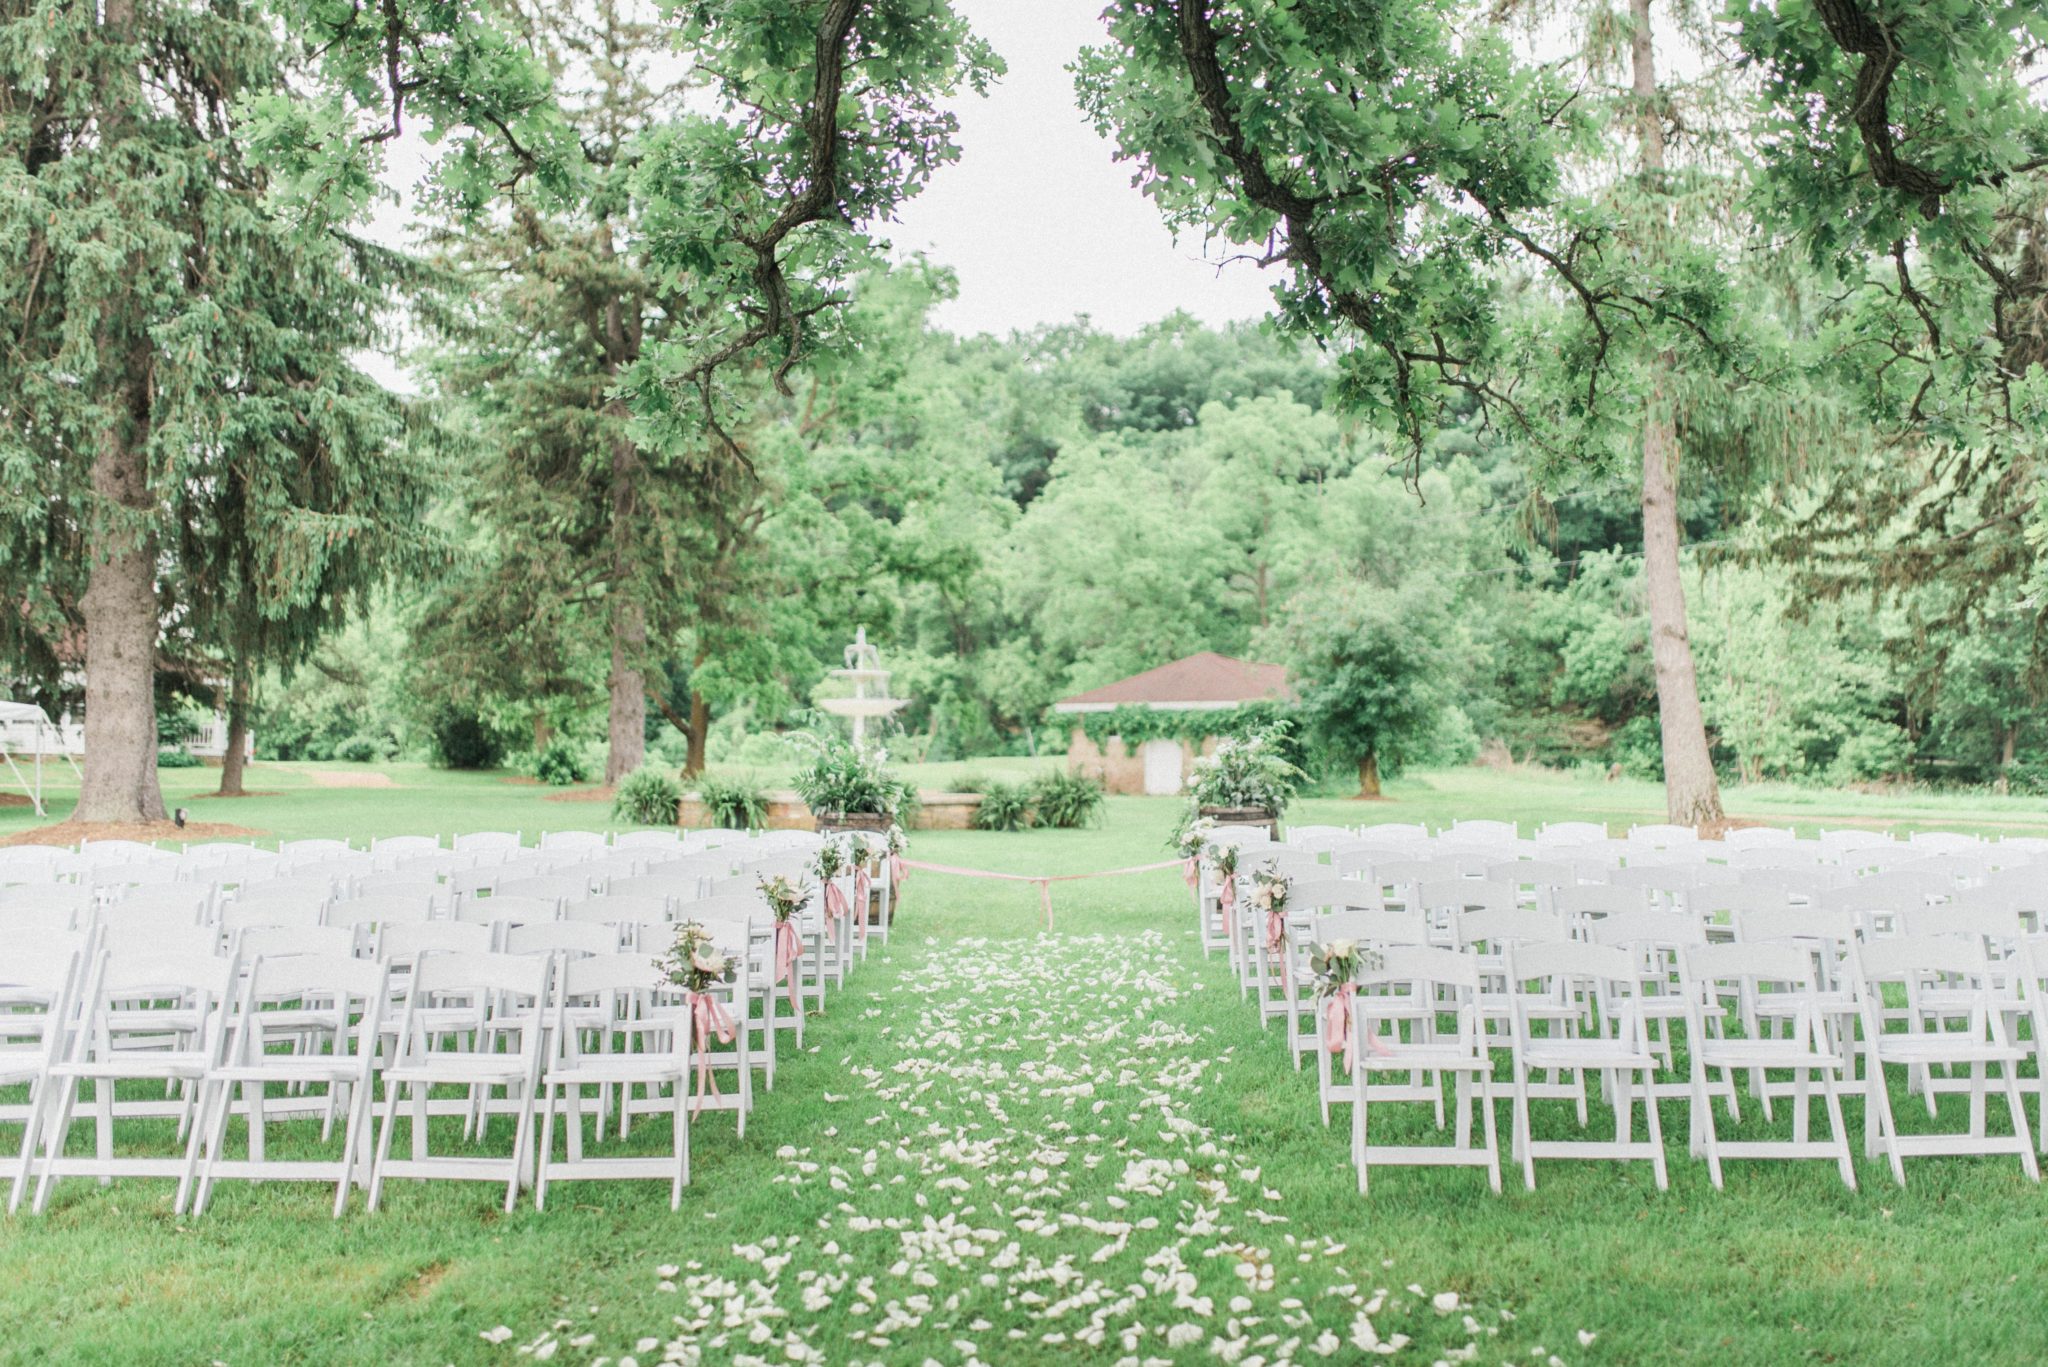 barn venue for wedding in Wisconsin - Sugarland